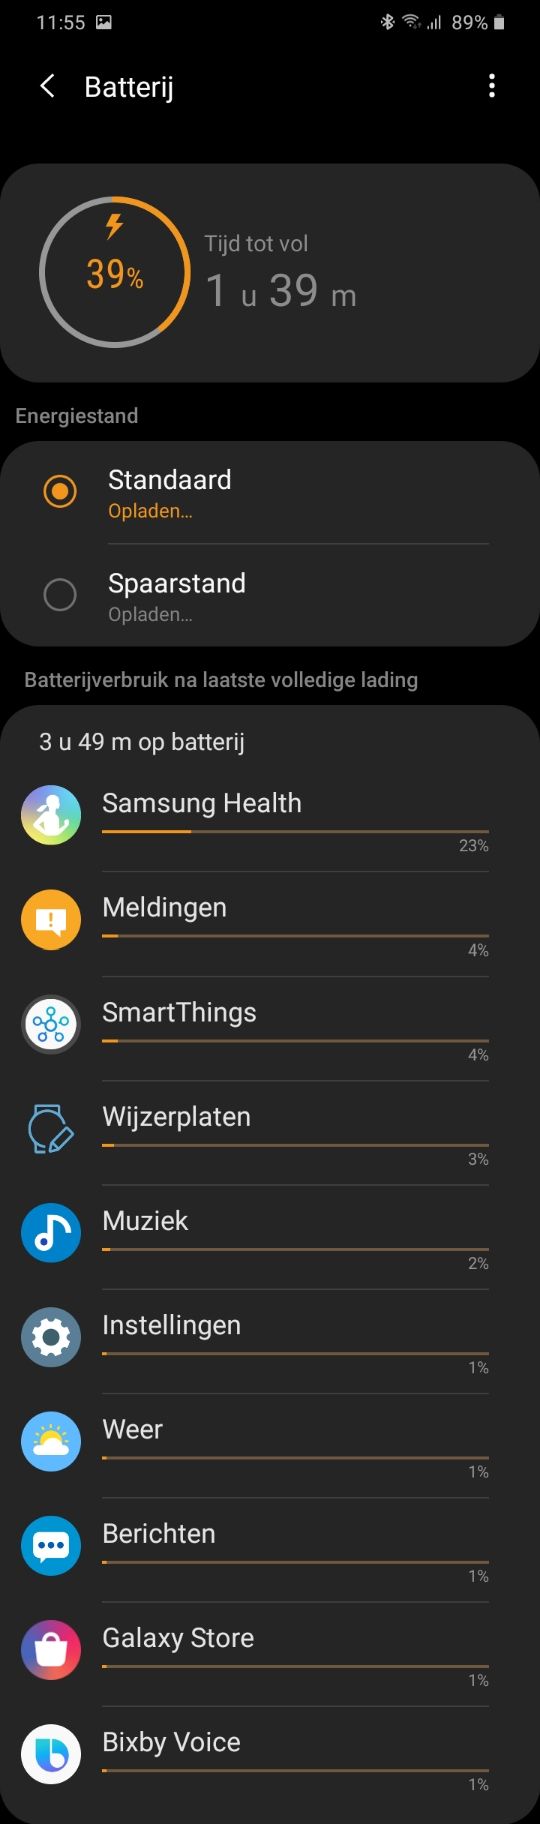 Samsung galaxy watch active batterij snel leeg - Samsung Community